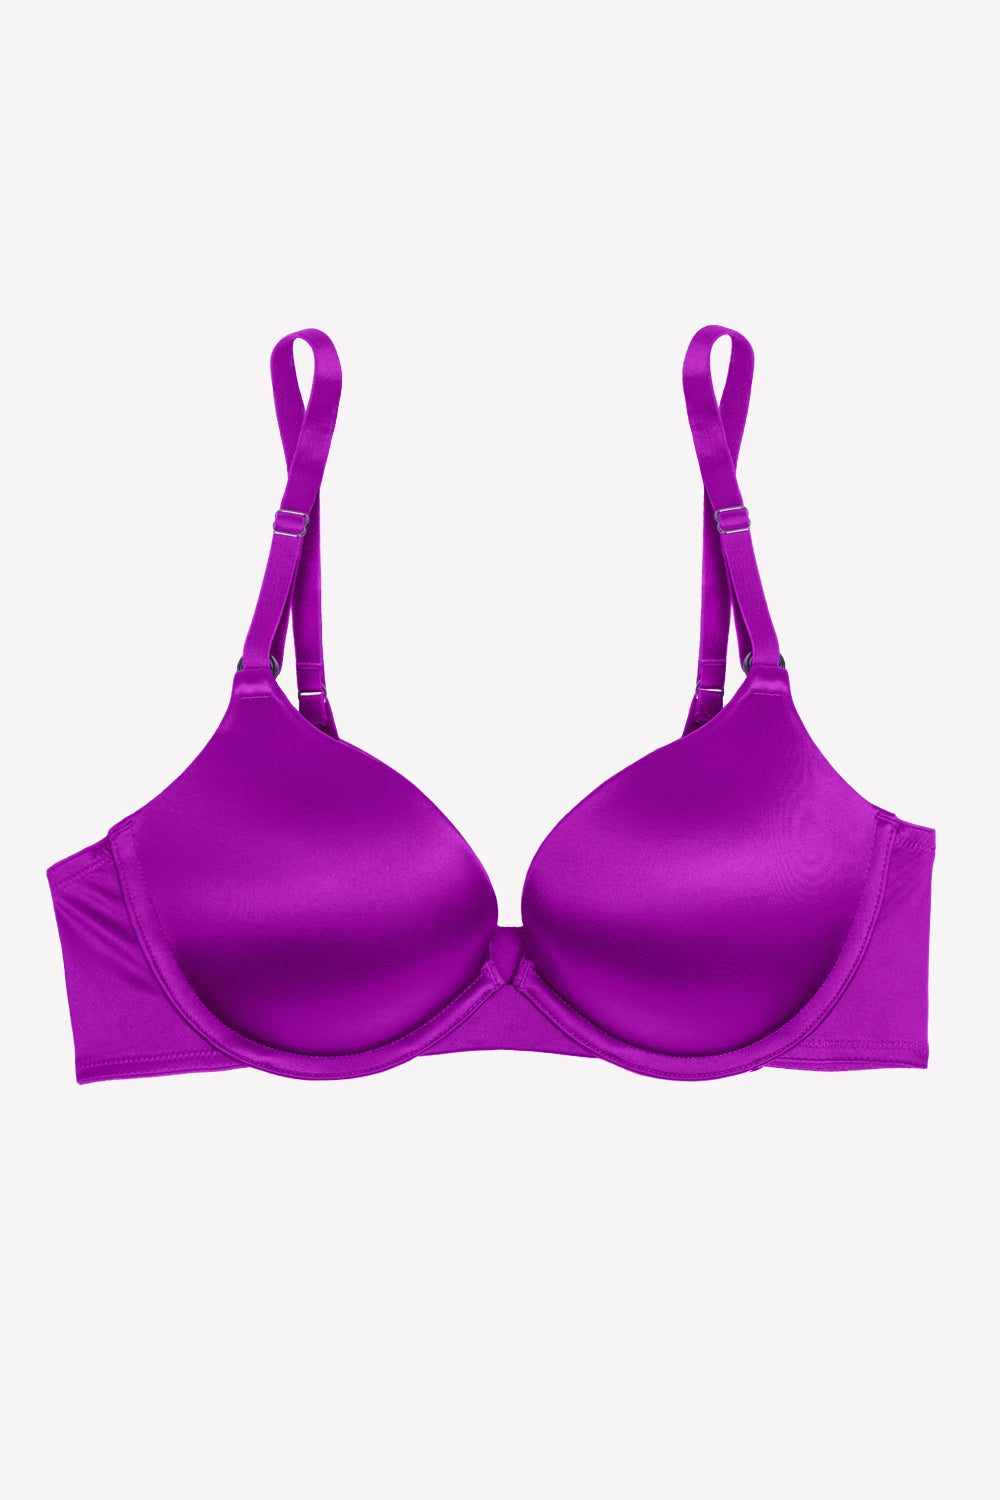 VS very sexy satin shine rhinestone strap push up bra new 36d peeble violet